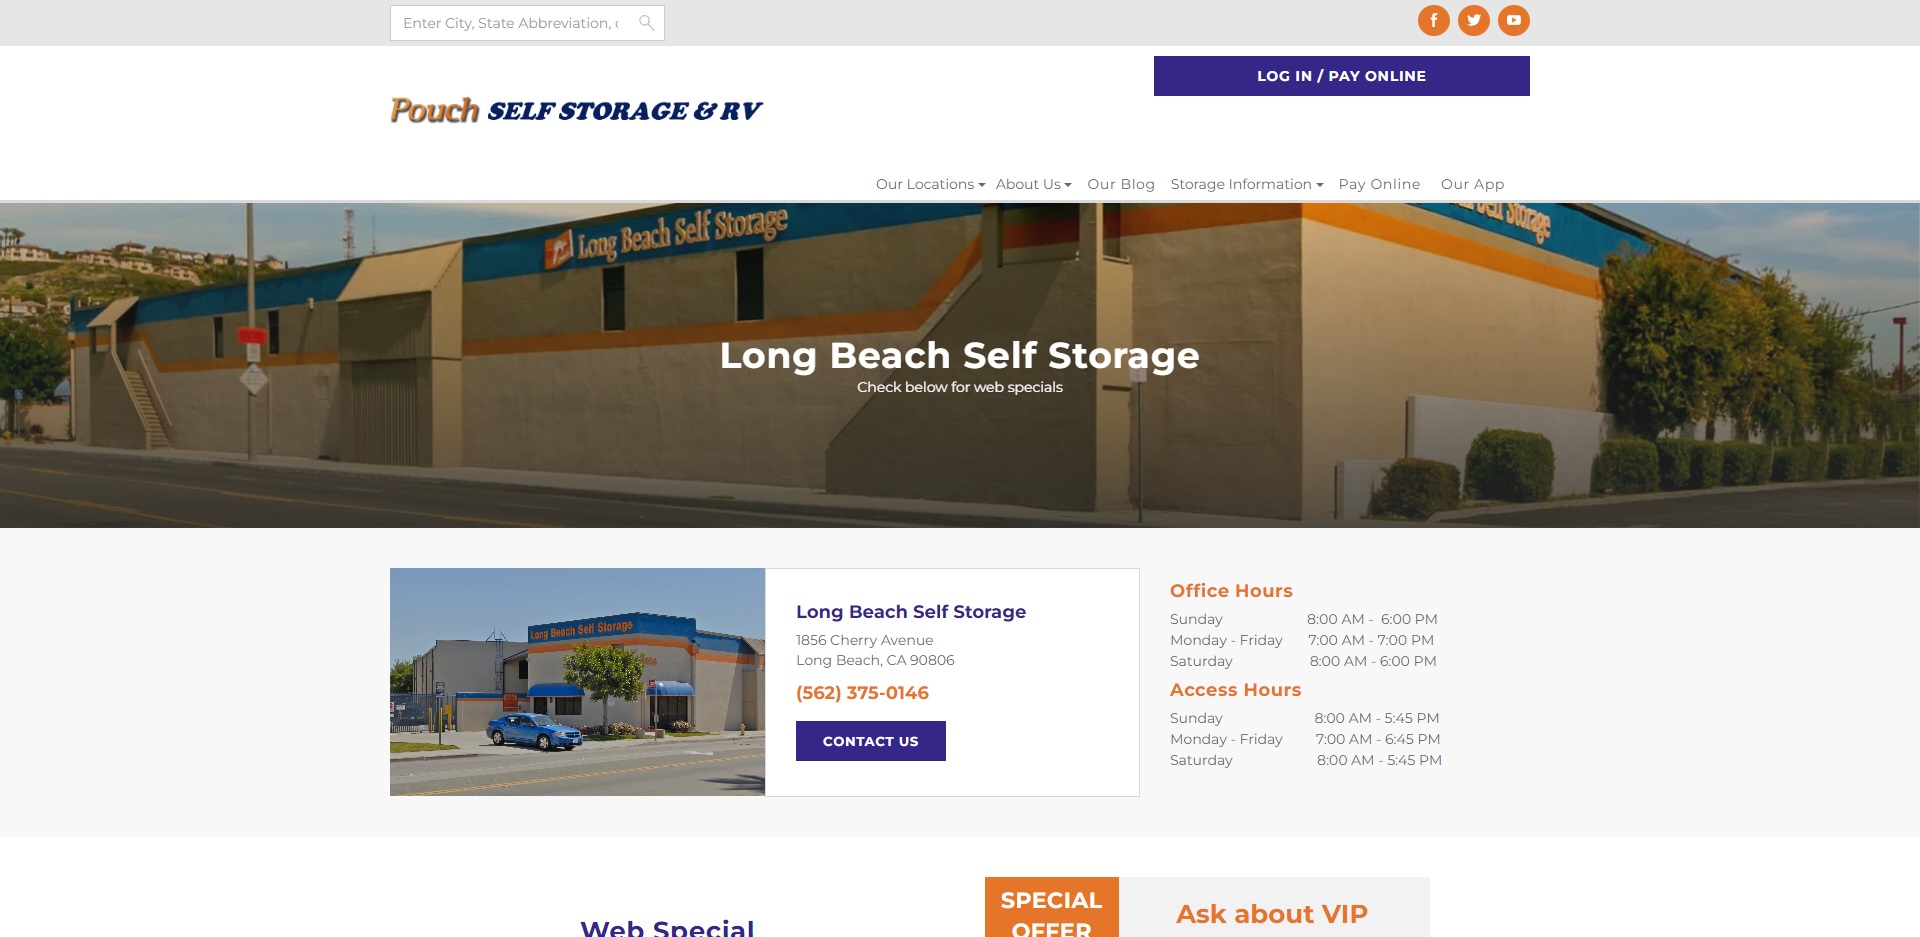 The Best Storage in Long Beach, CA